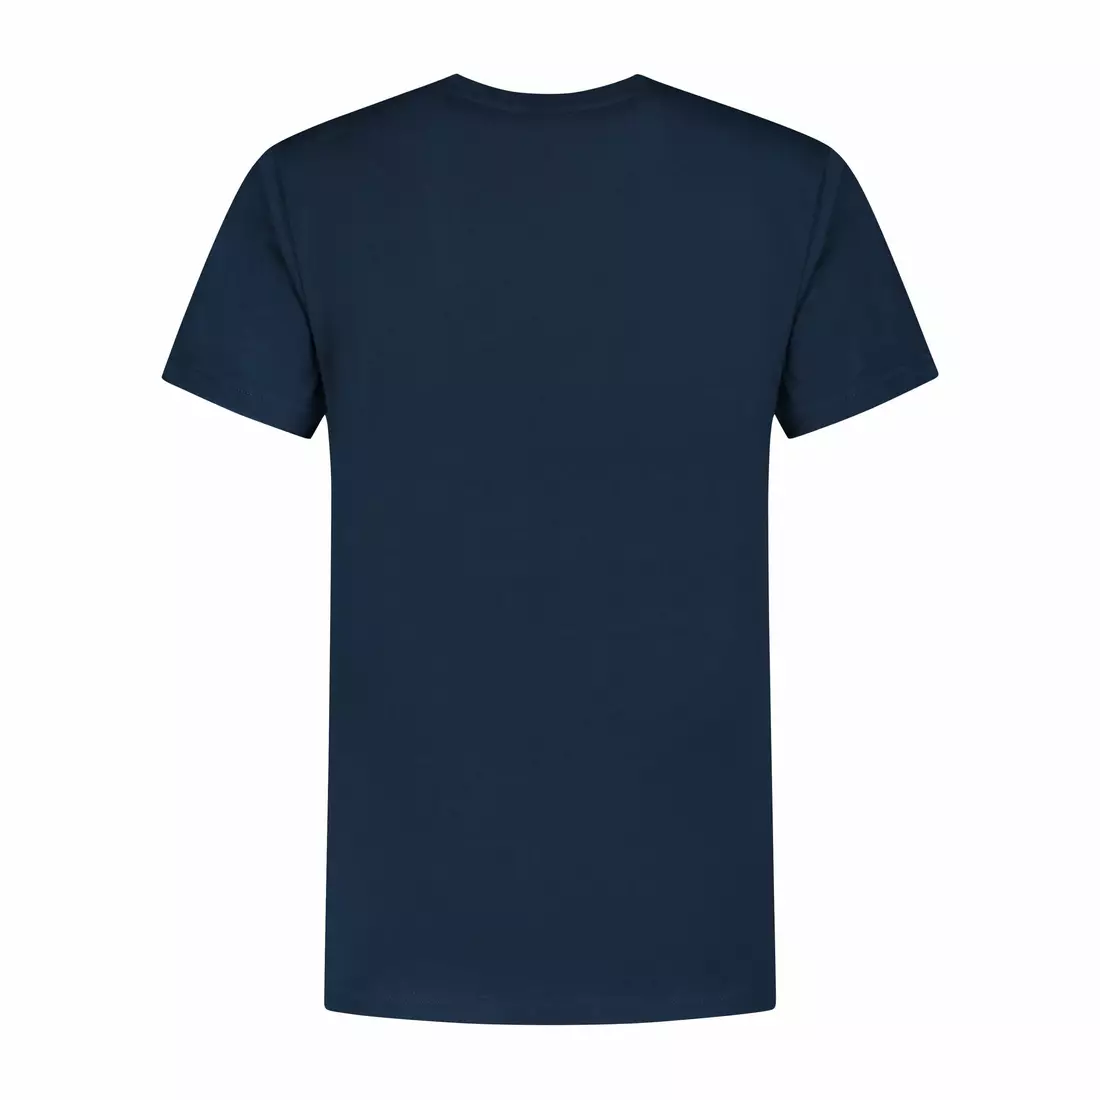 Rogelli men's t-shirt GRAPHIC navy blue